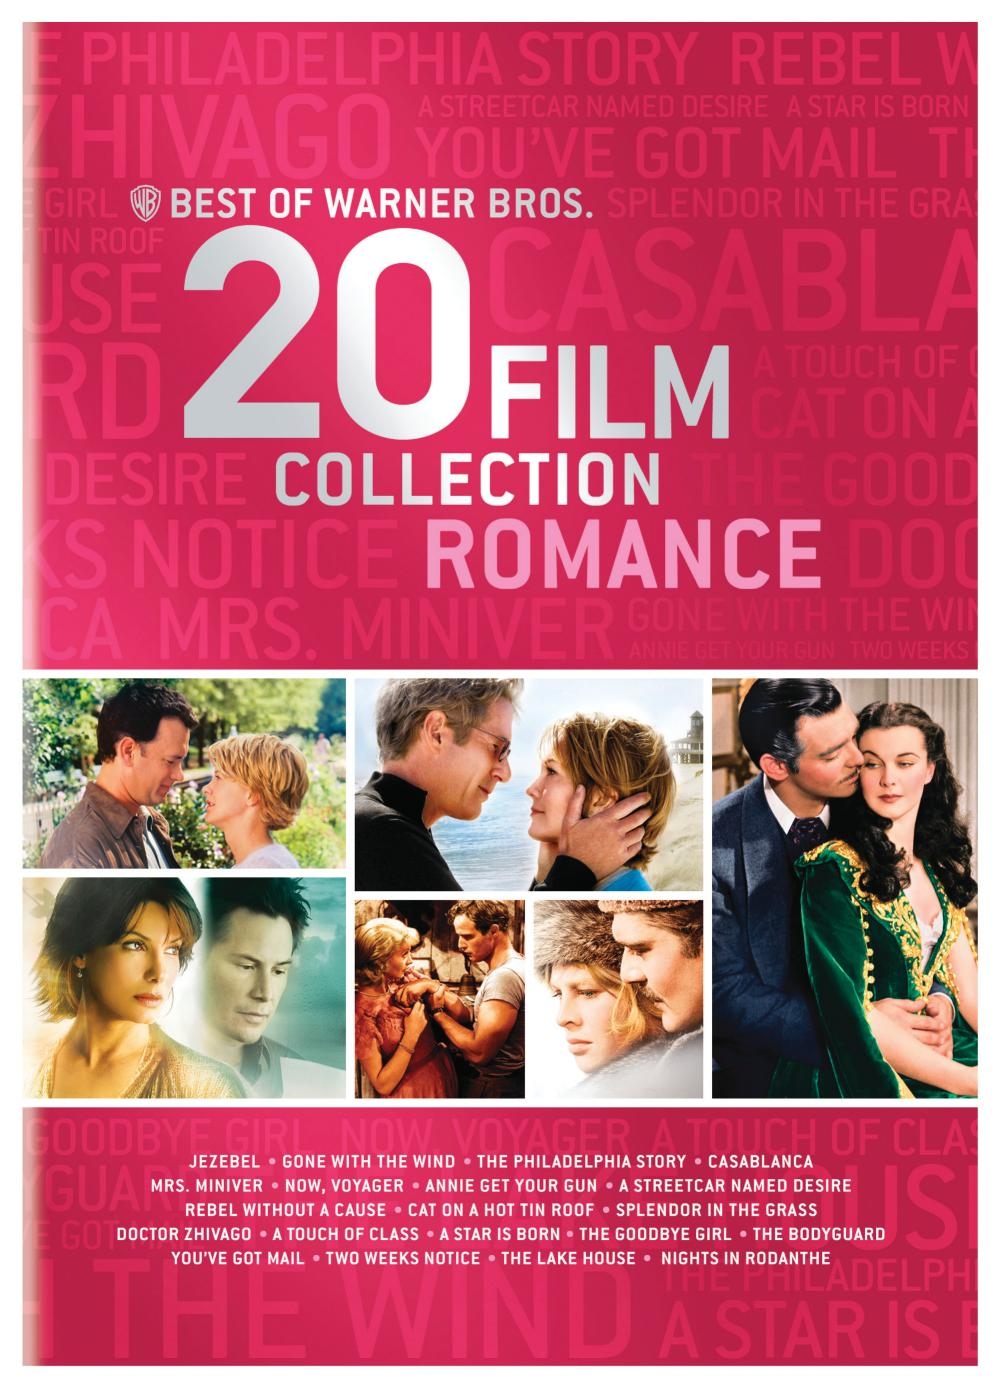 BEST OF WARNER BROS 20 FILM COLLECTION ROMANCE